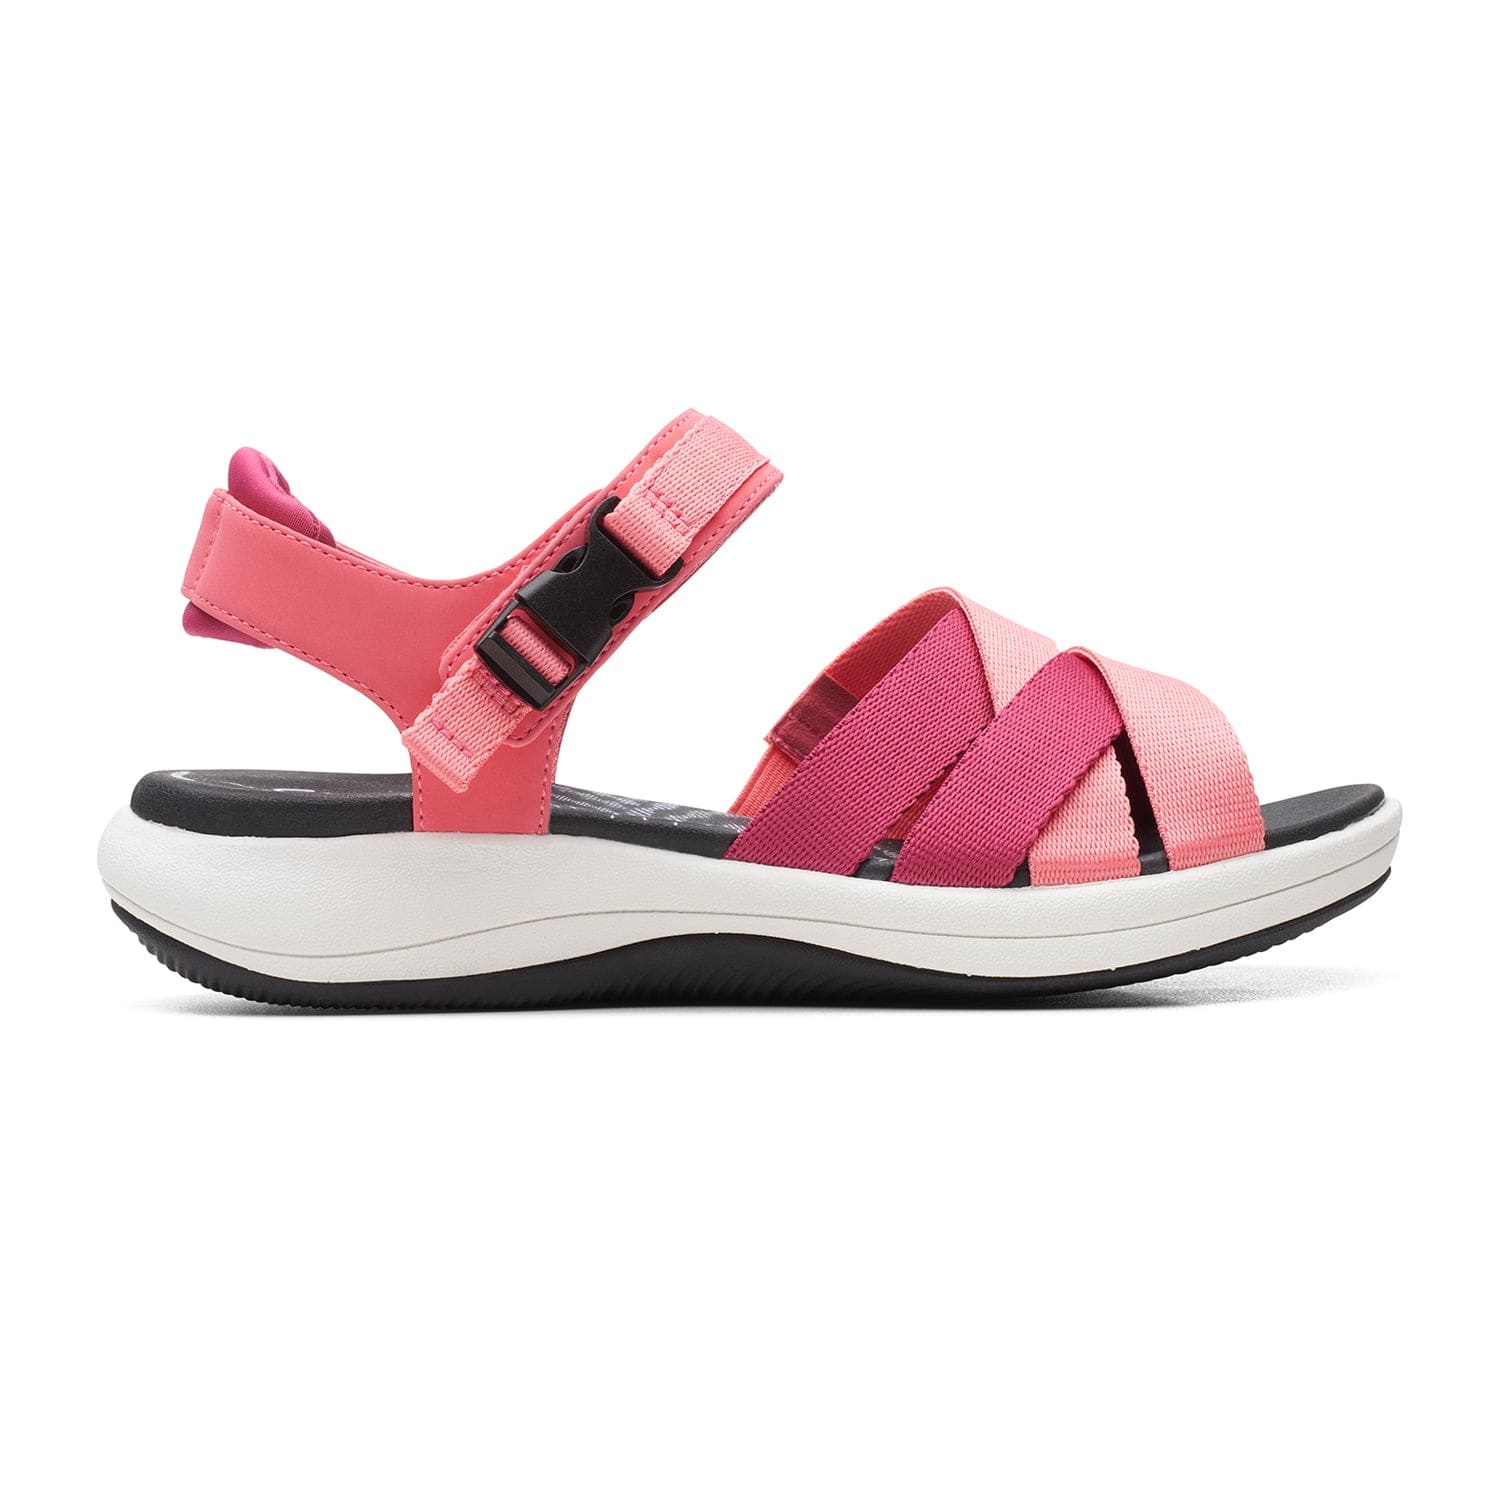 Clarks Mira Tide Sandals - Bright Coral - 261645664 - D Width (Standard Fit)